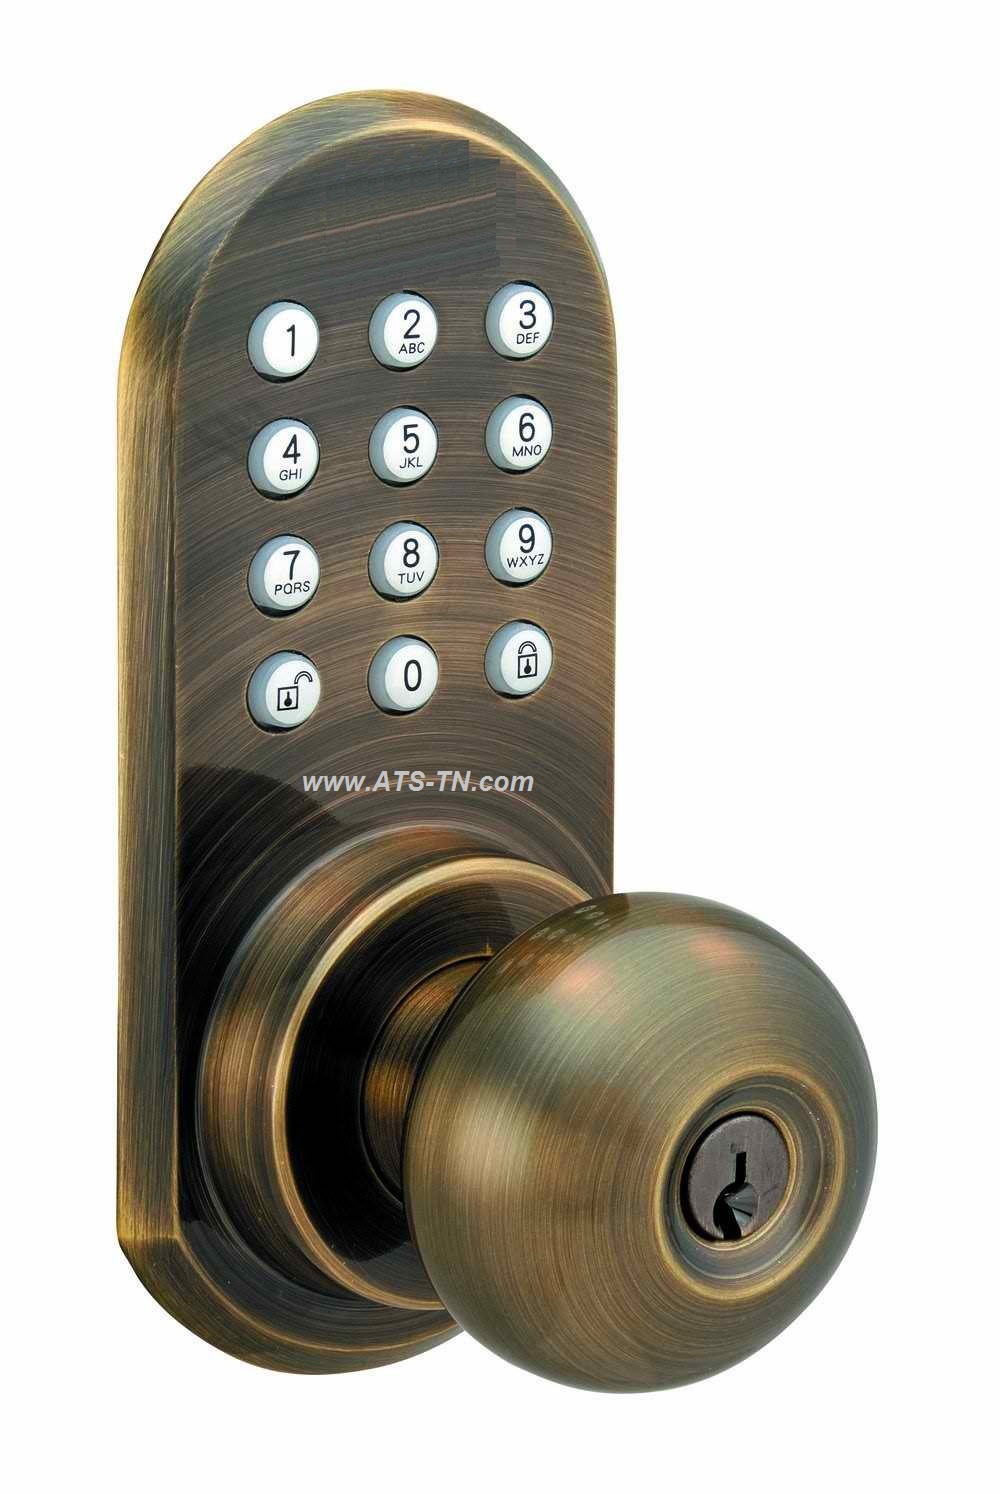 remote controlled doorlock keypad